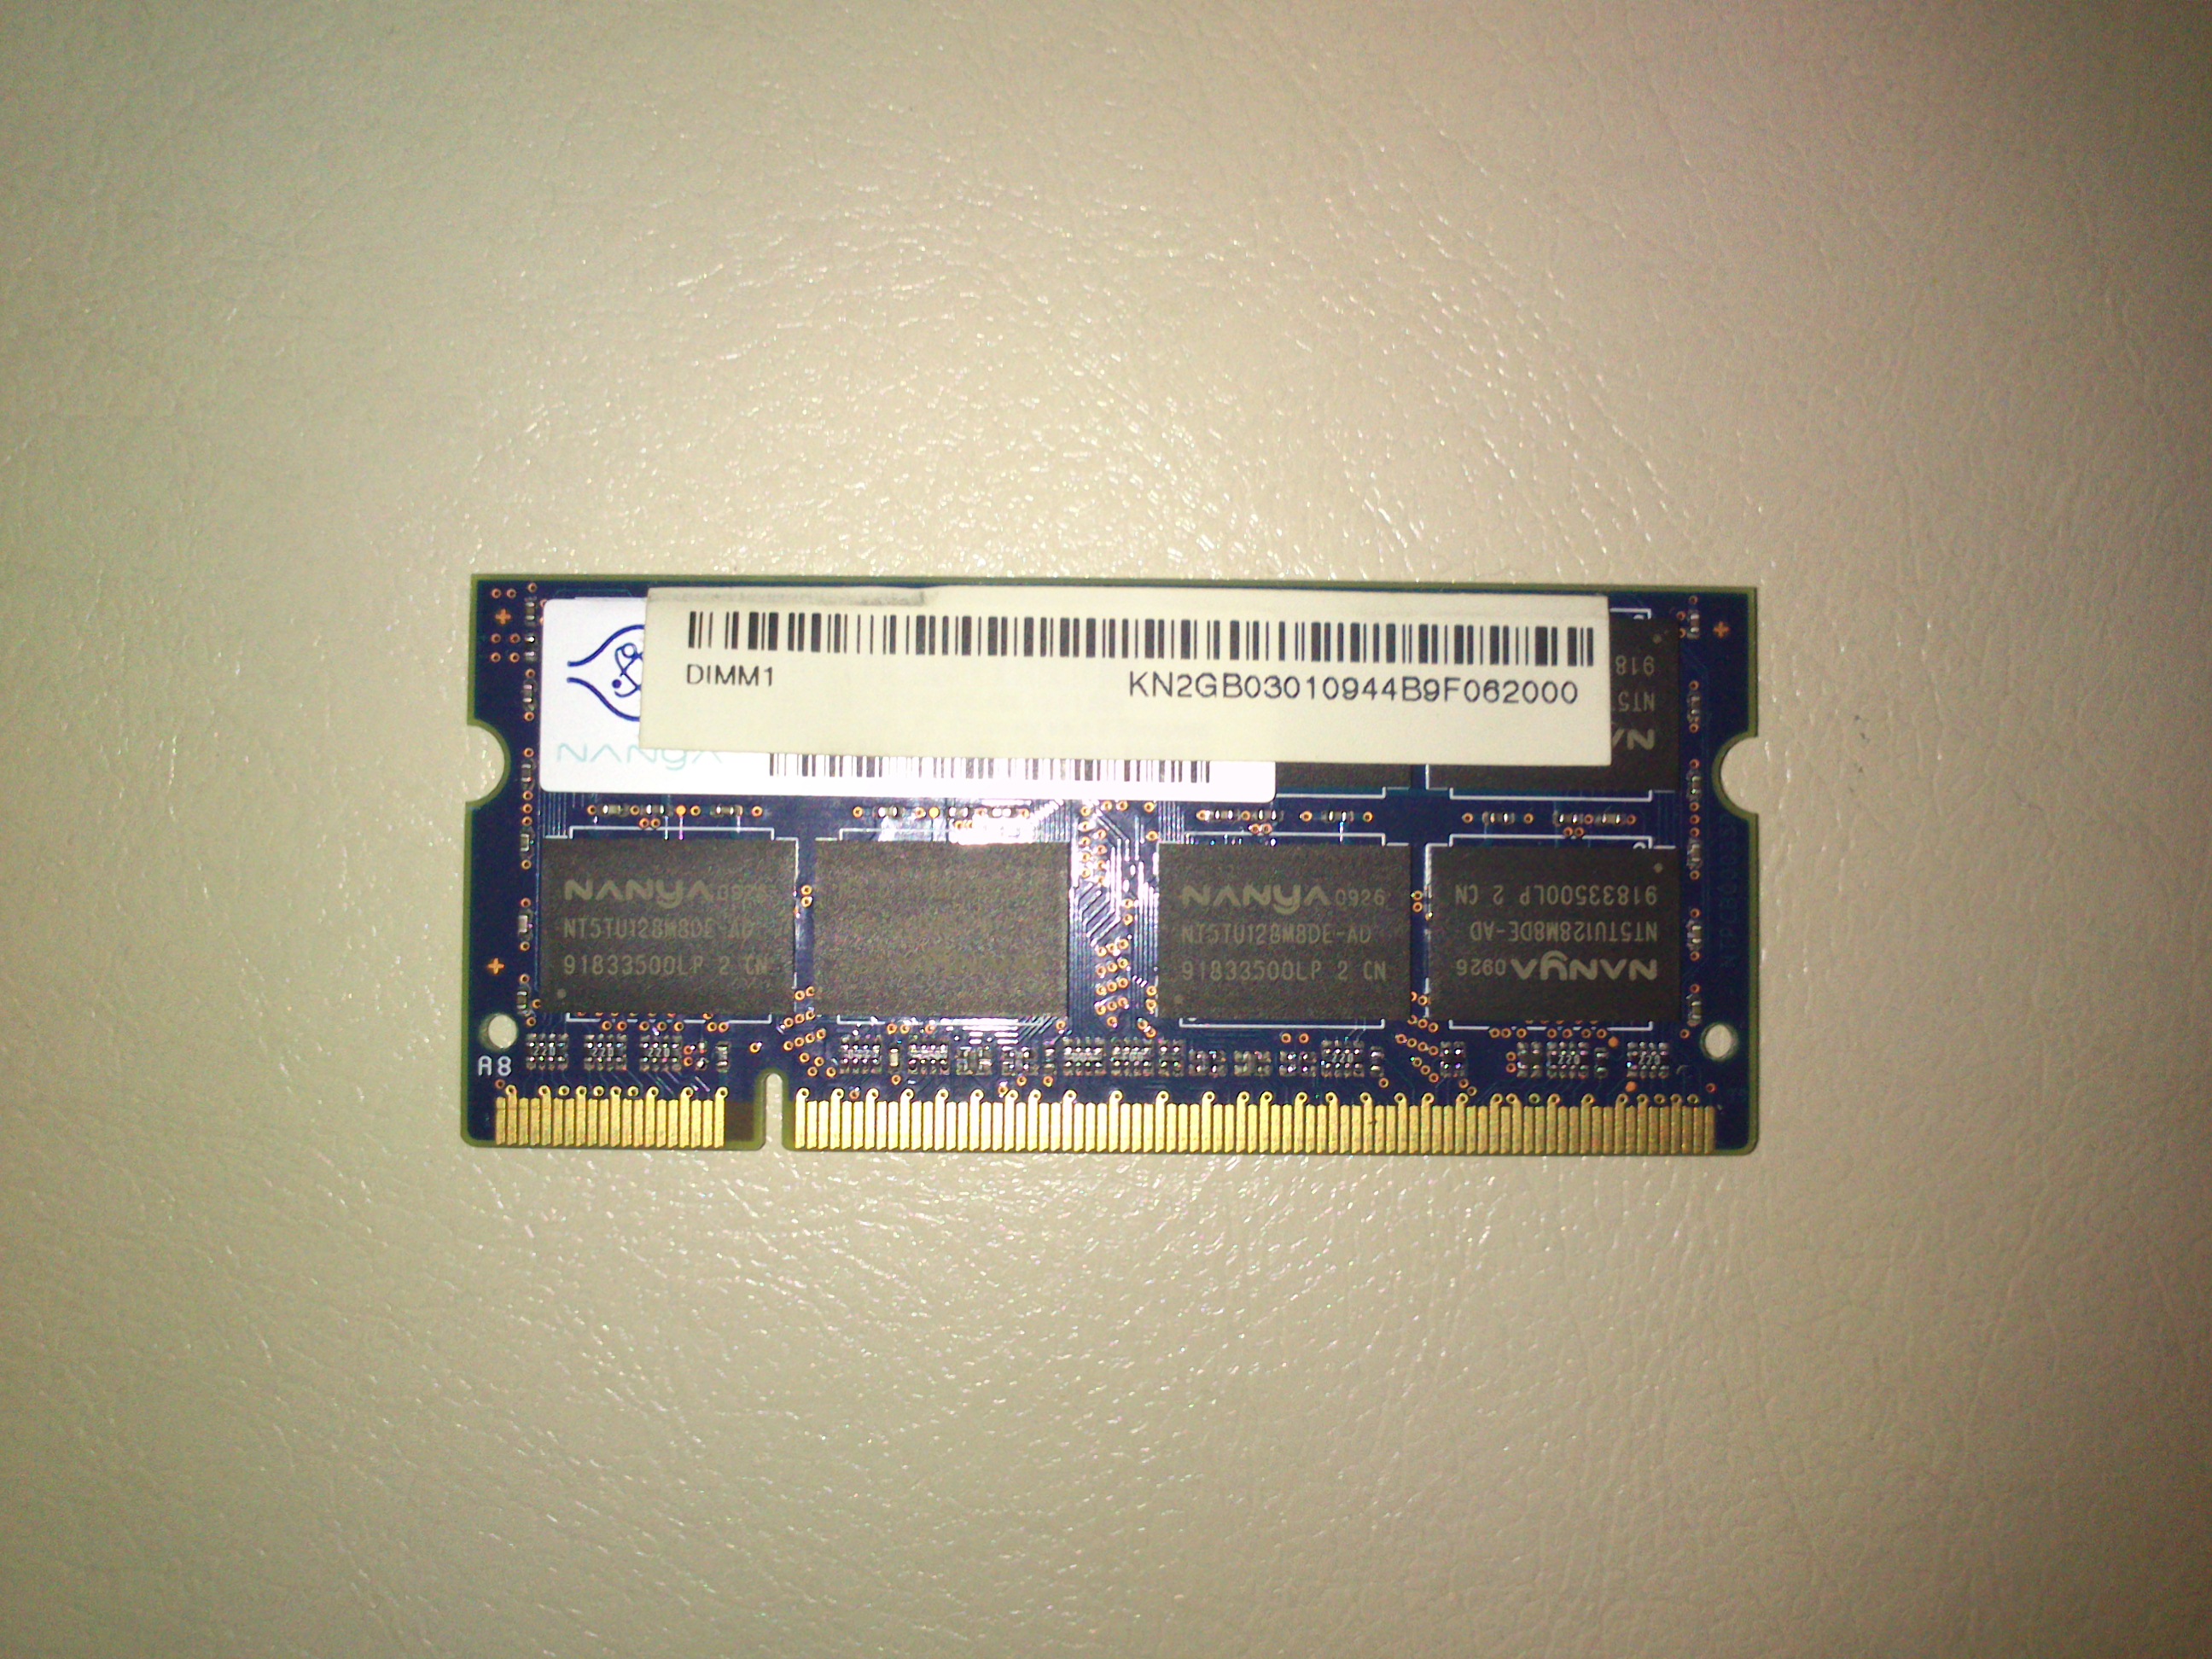  Satılık/Takaslık NANYA 2 GB DDR2 800 MHZ Notebook Ram 30 TL